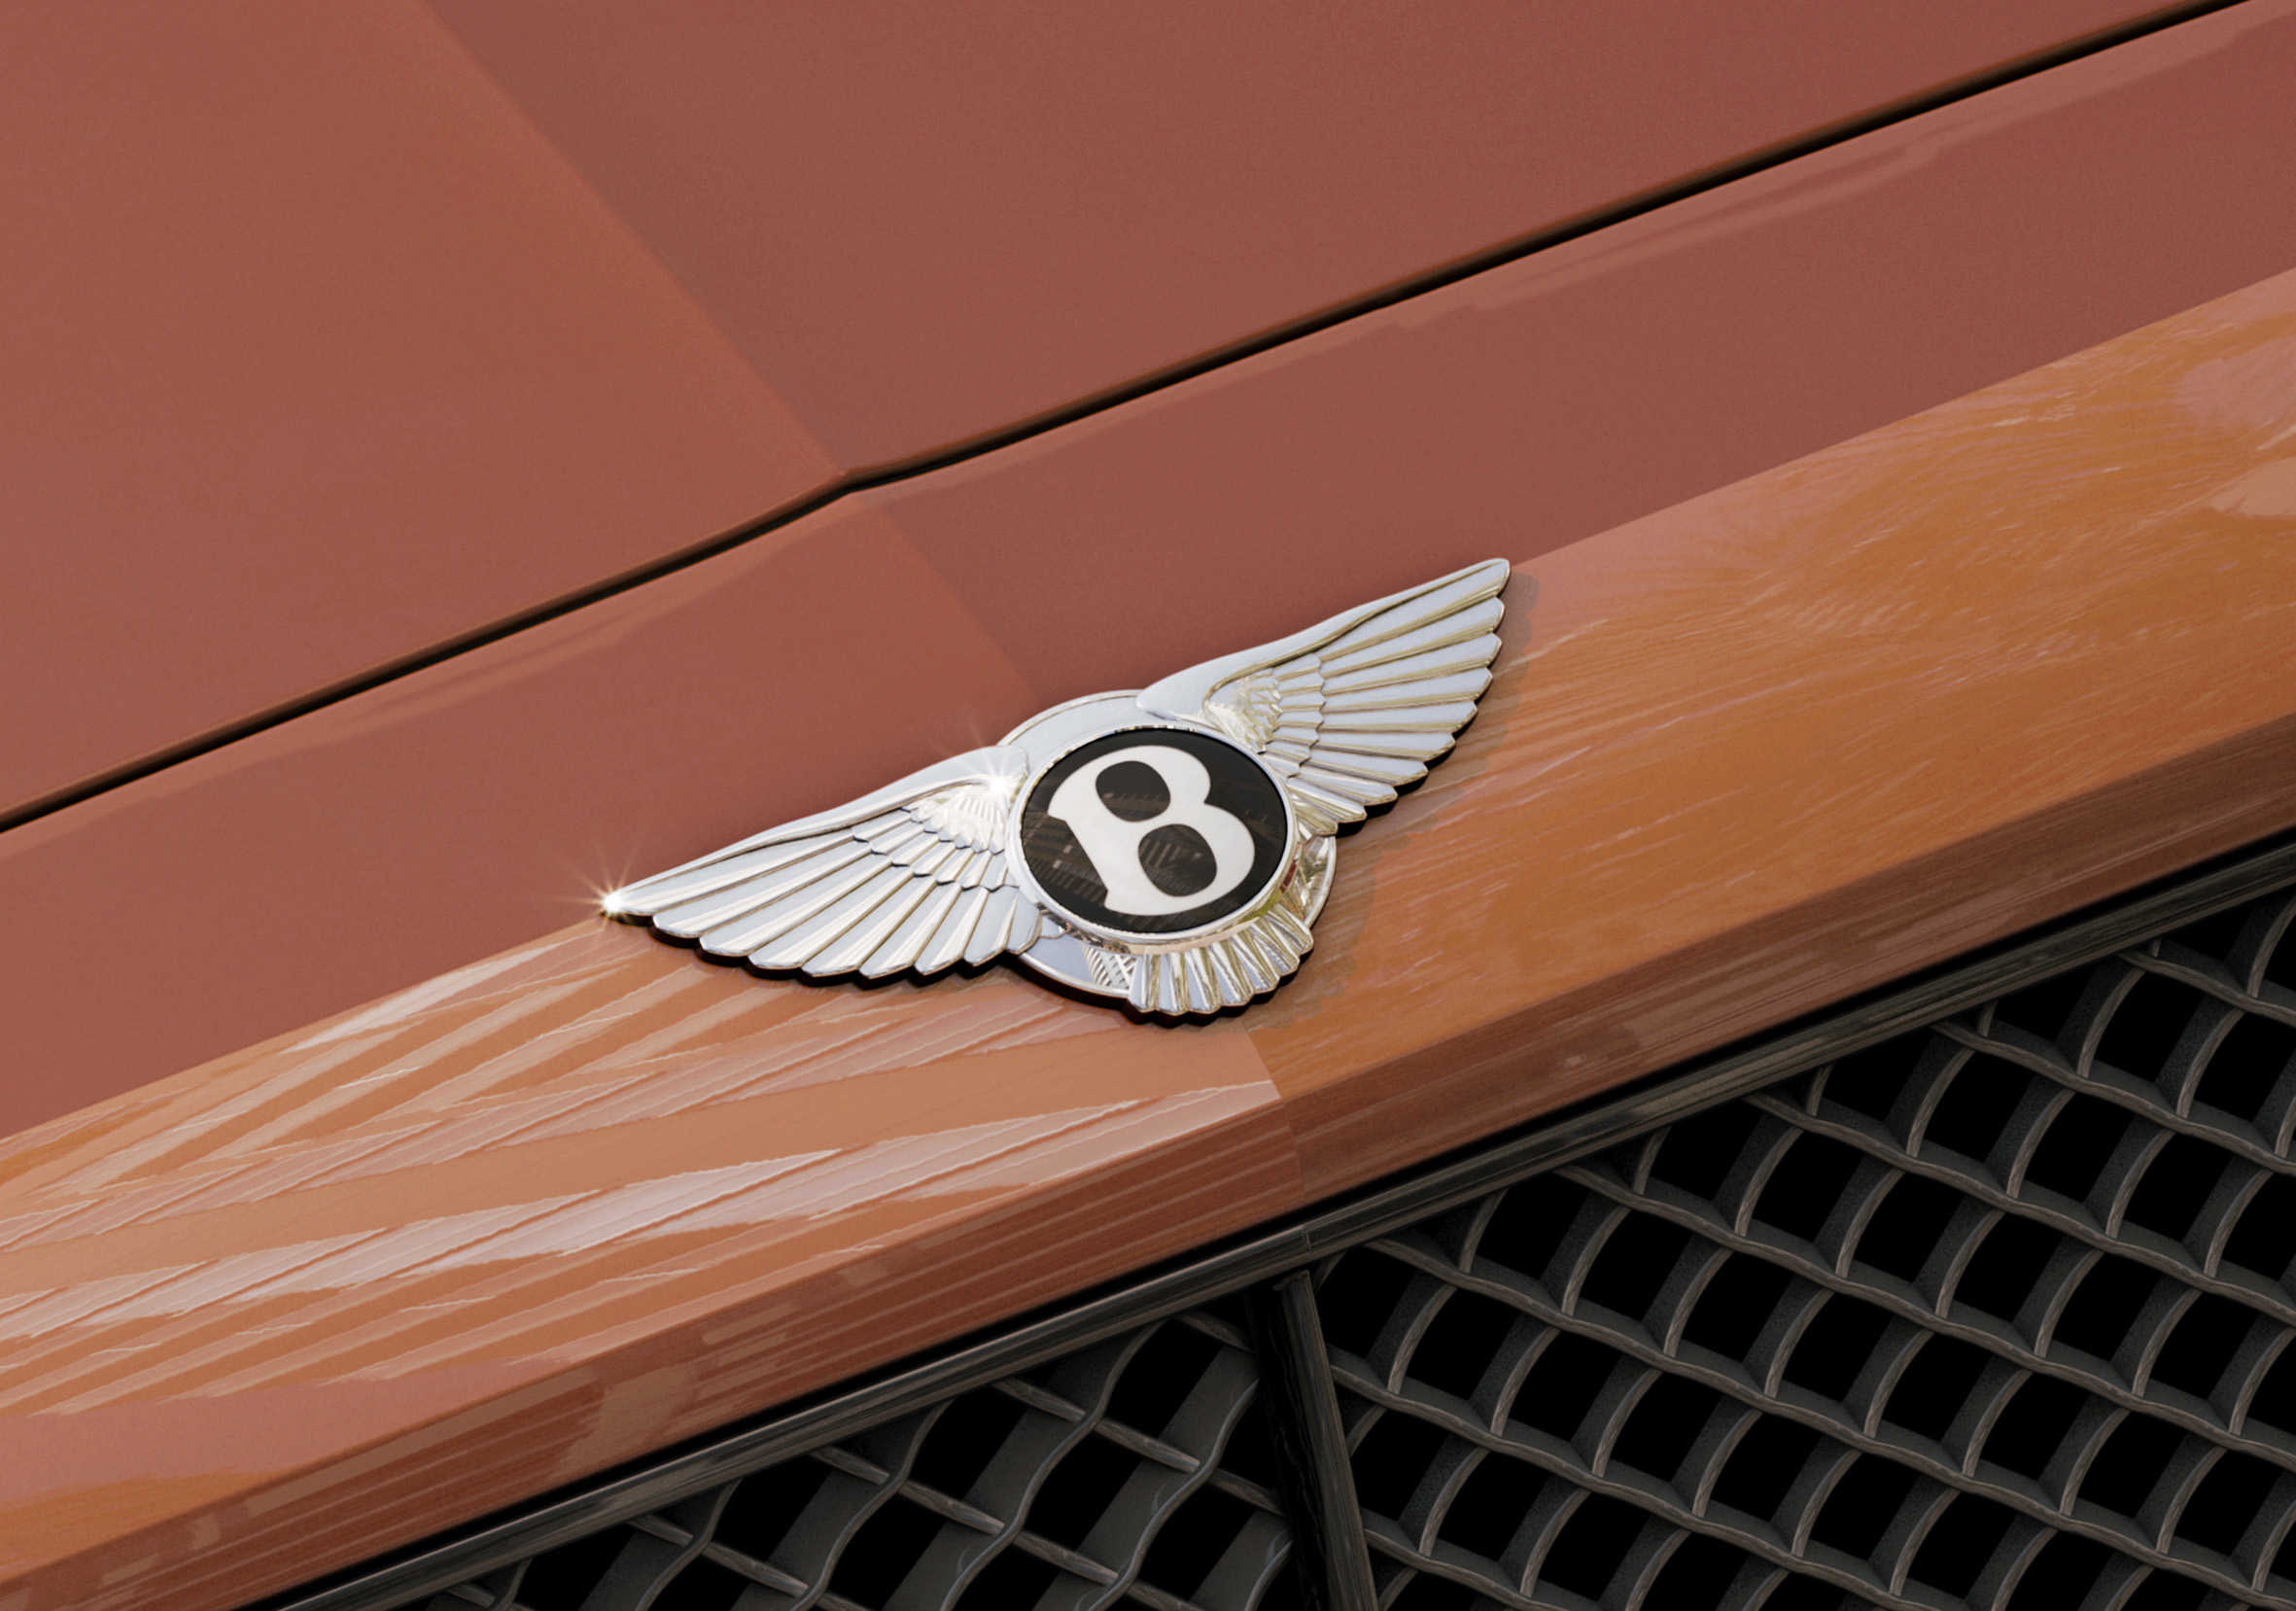 Bentley Motors chooses Dialogue as content agency in 2018